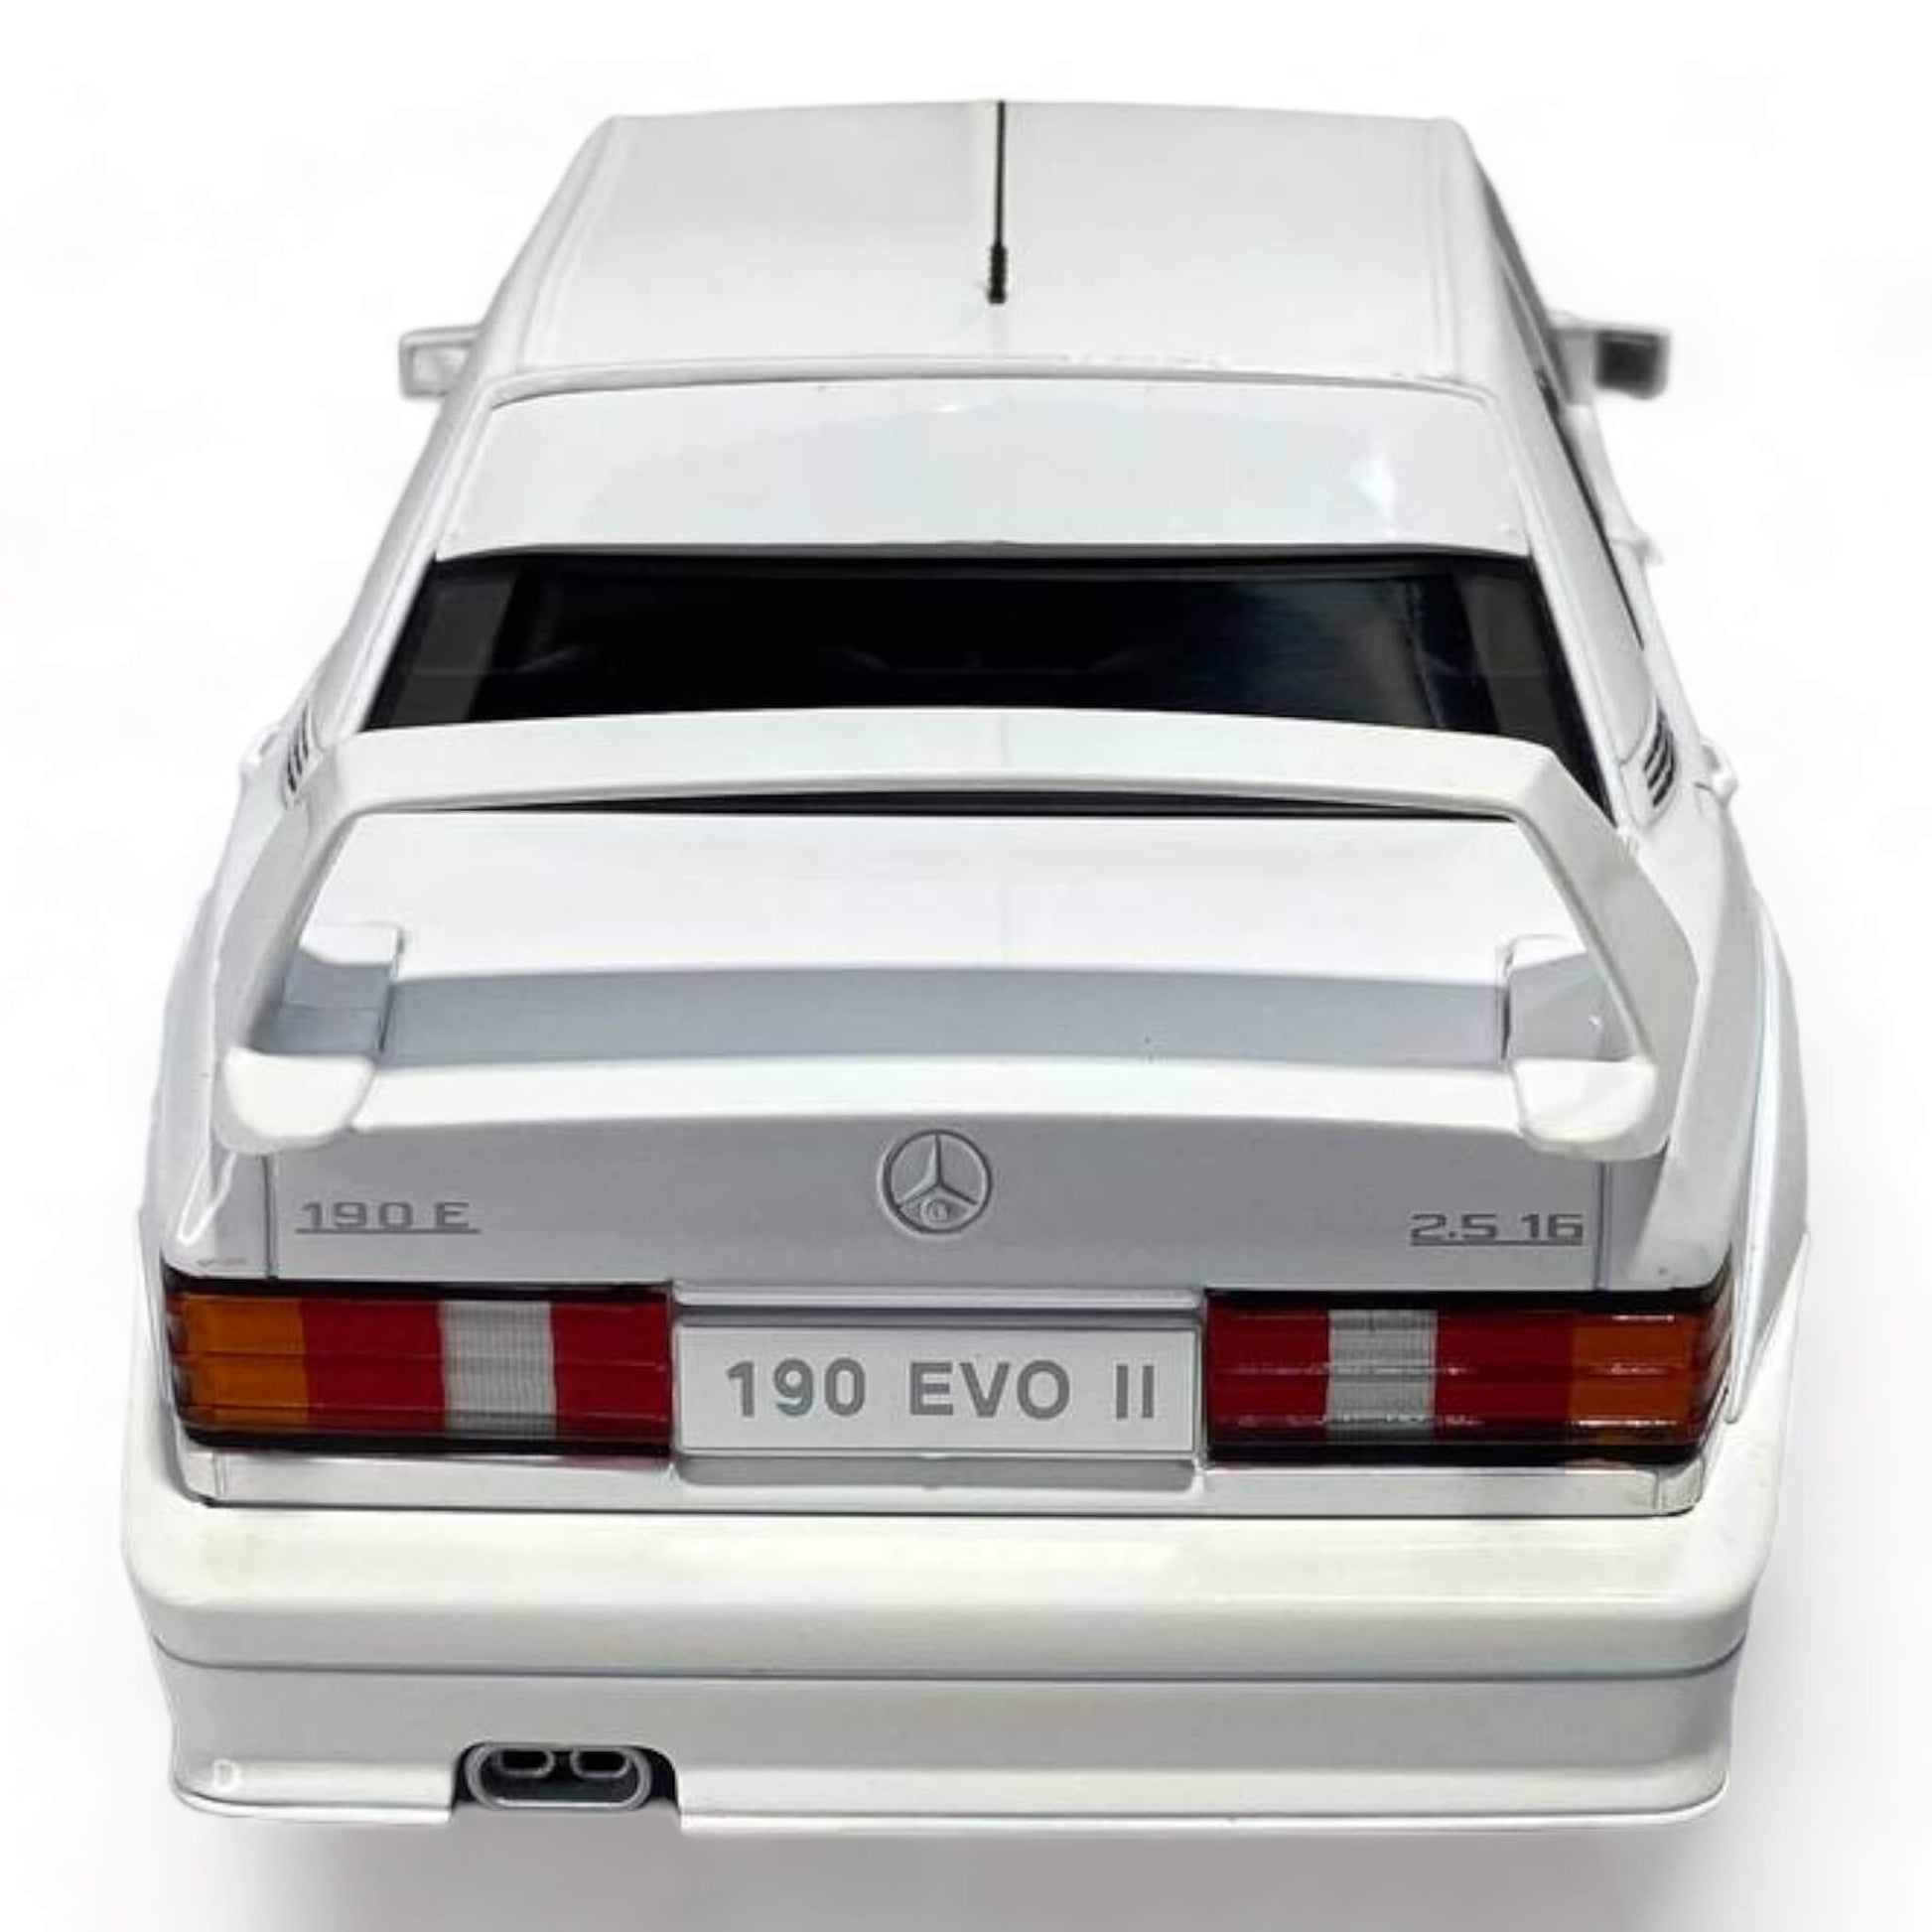 1/18 Diecast Mercedes Benz 190E EVO White 1990 by Solido Model Car - Dturman Dubai|Sold in Dturman.com Dubai UAE.